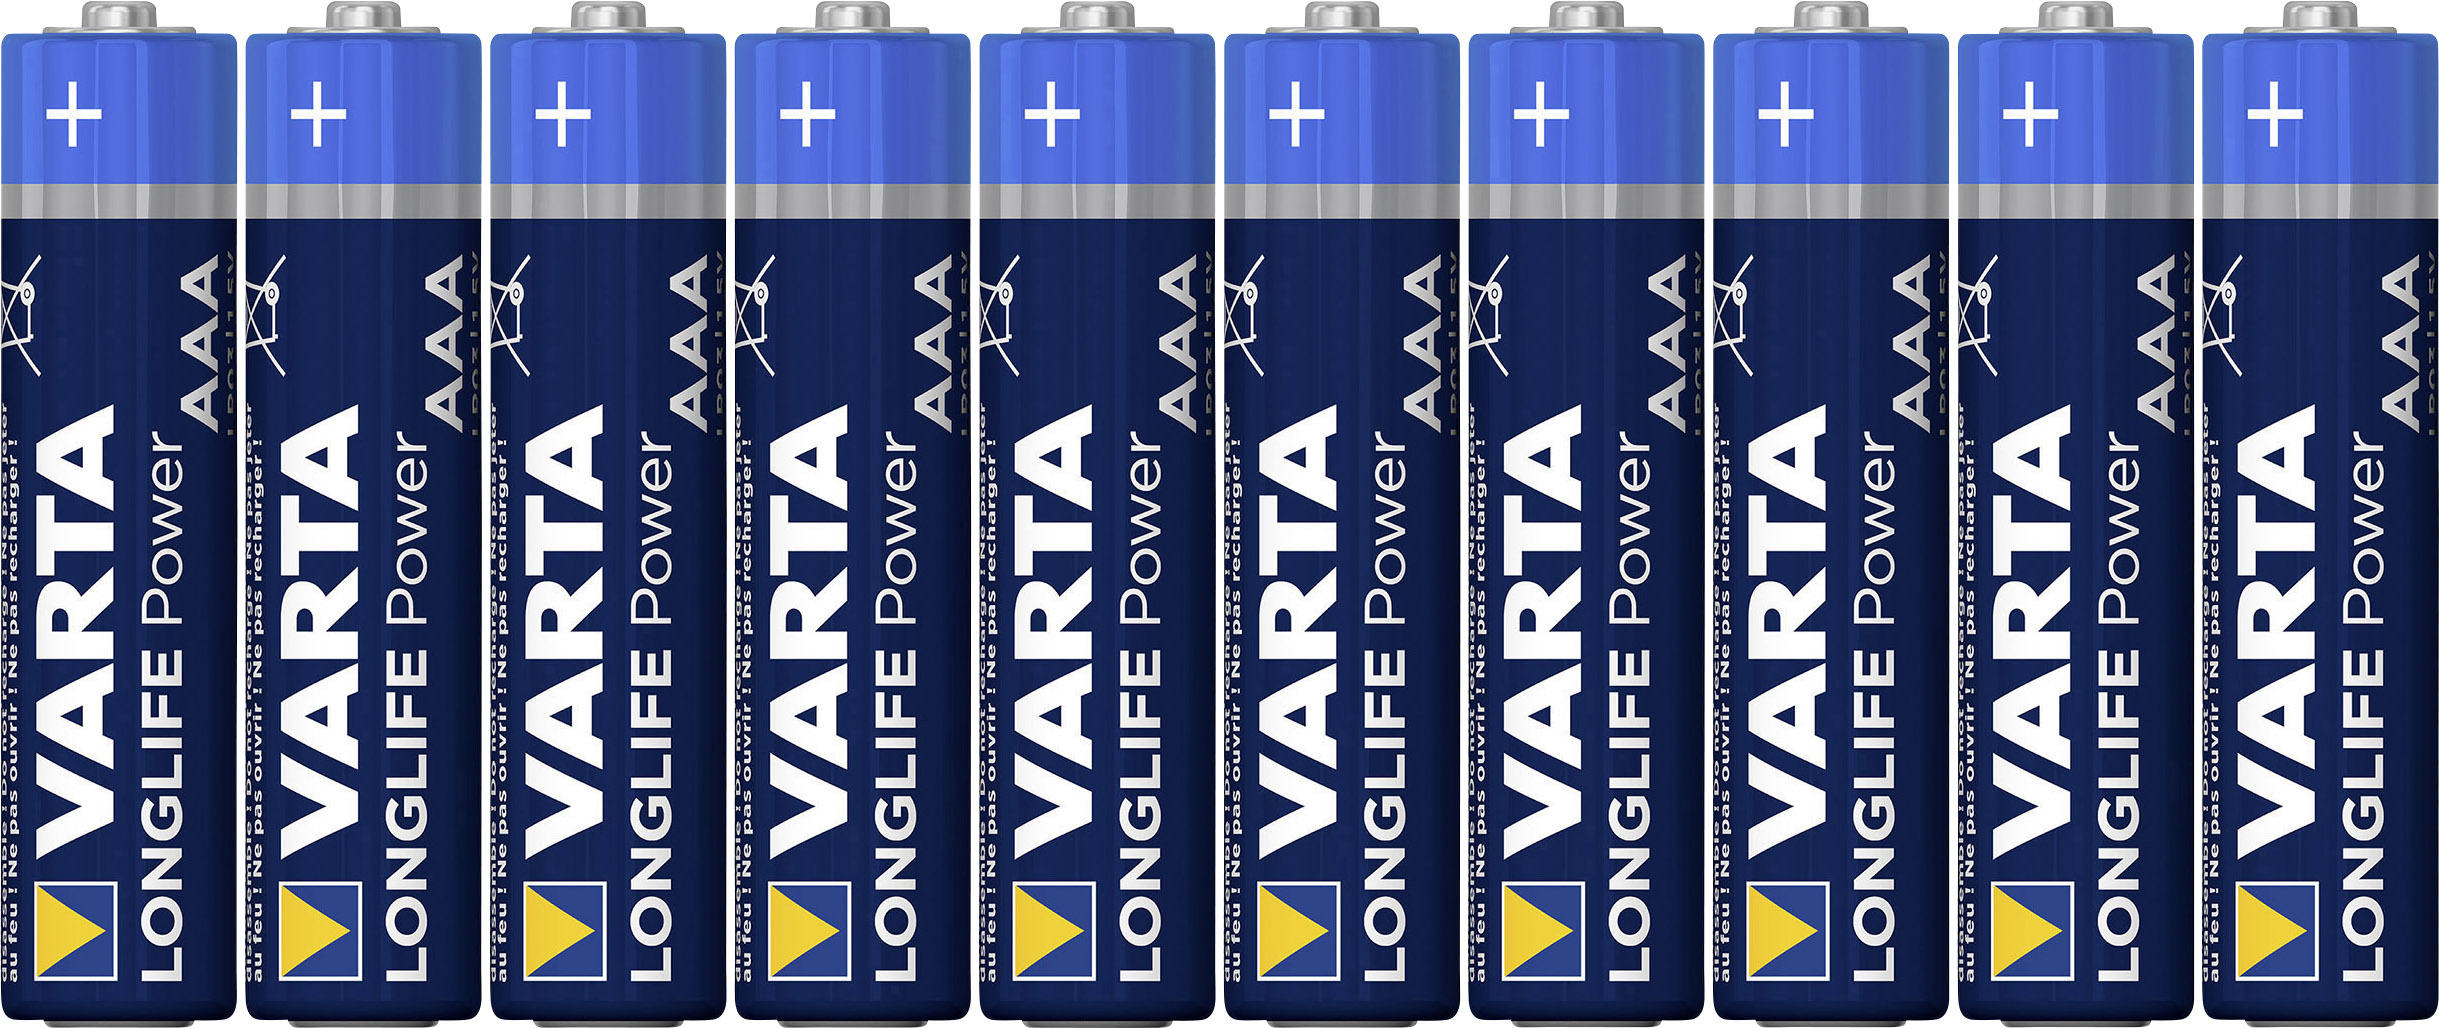 Varta LONGLIFE Power AAA Bli 10 Micro (AAA)-Batterie Alkali-Mangan 1.5V 10St.